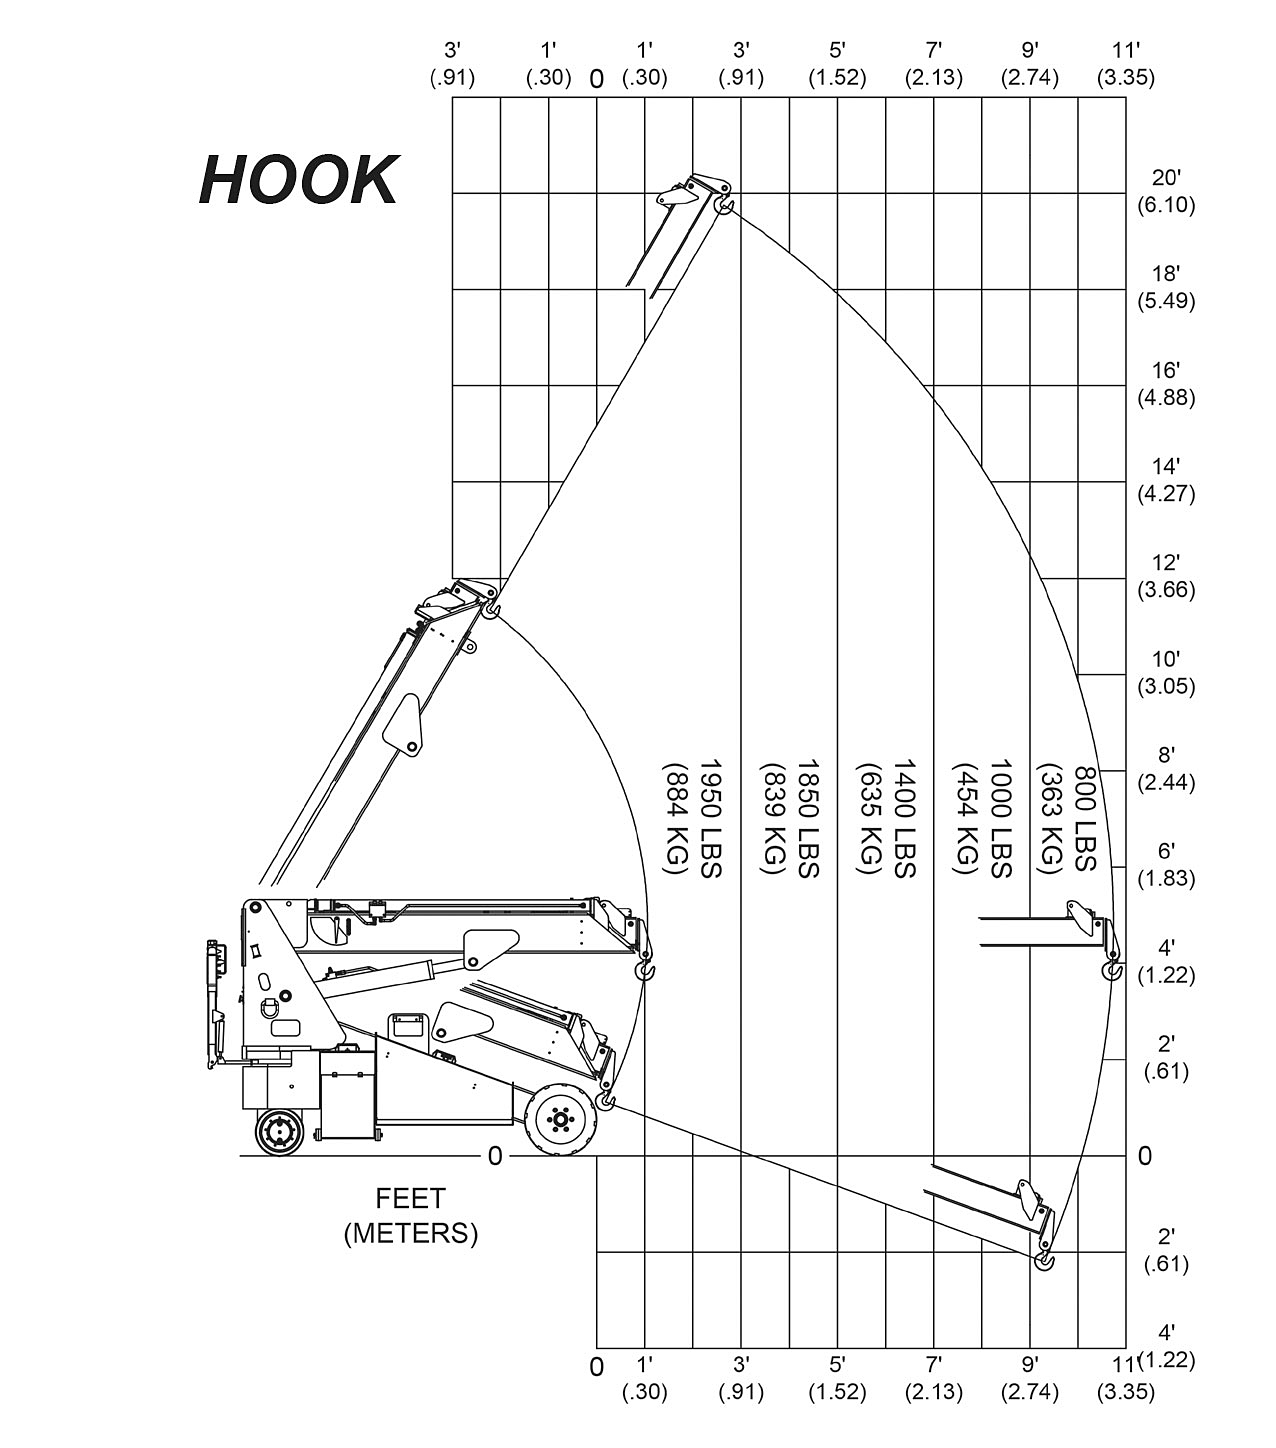 The Junior Hook Load Capacity